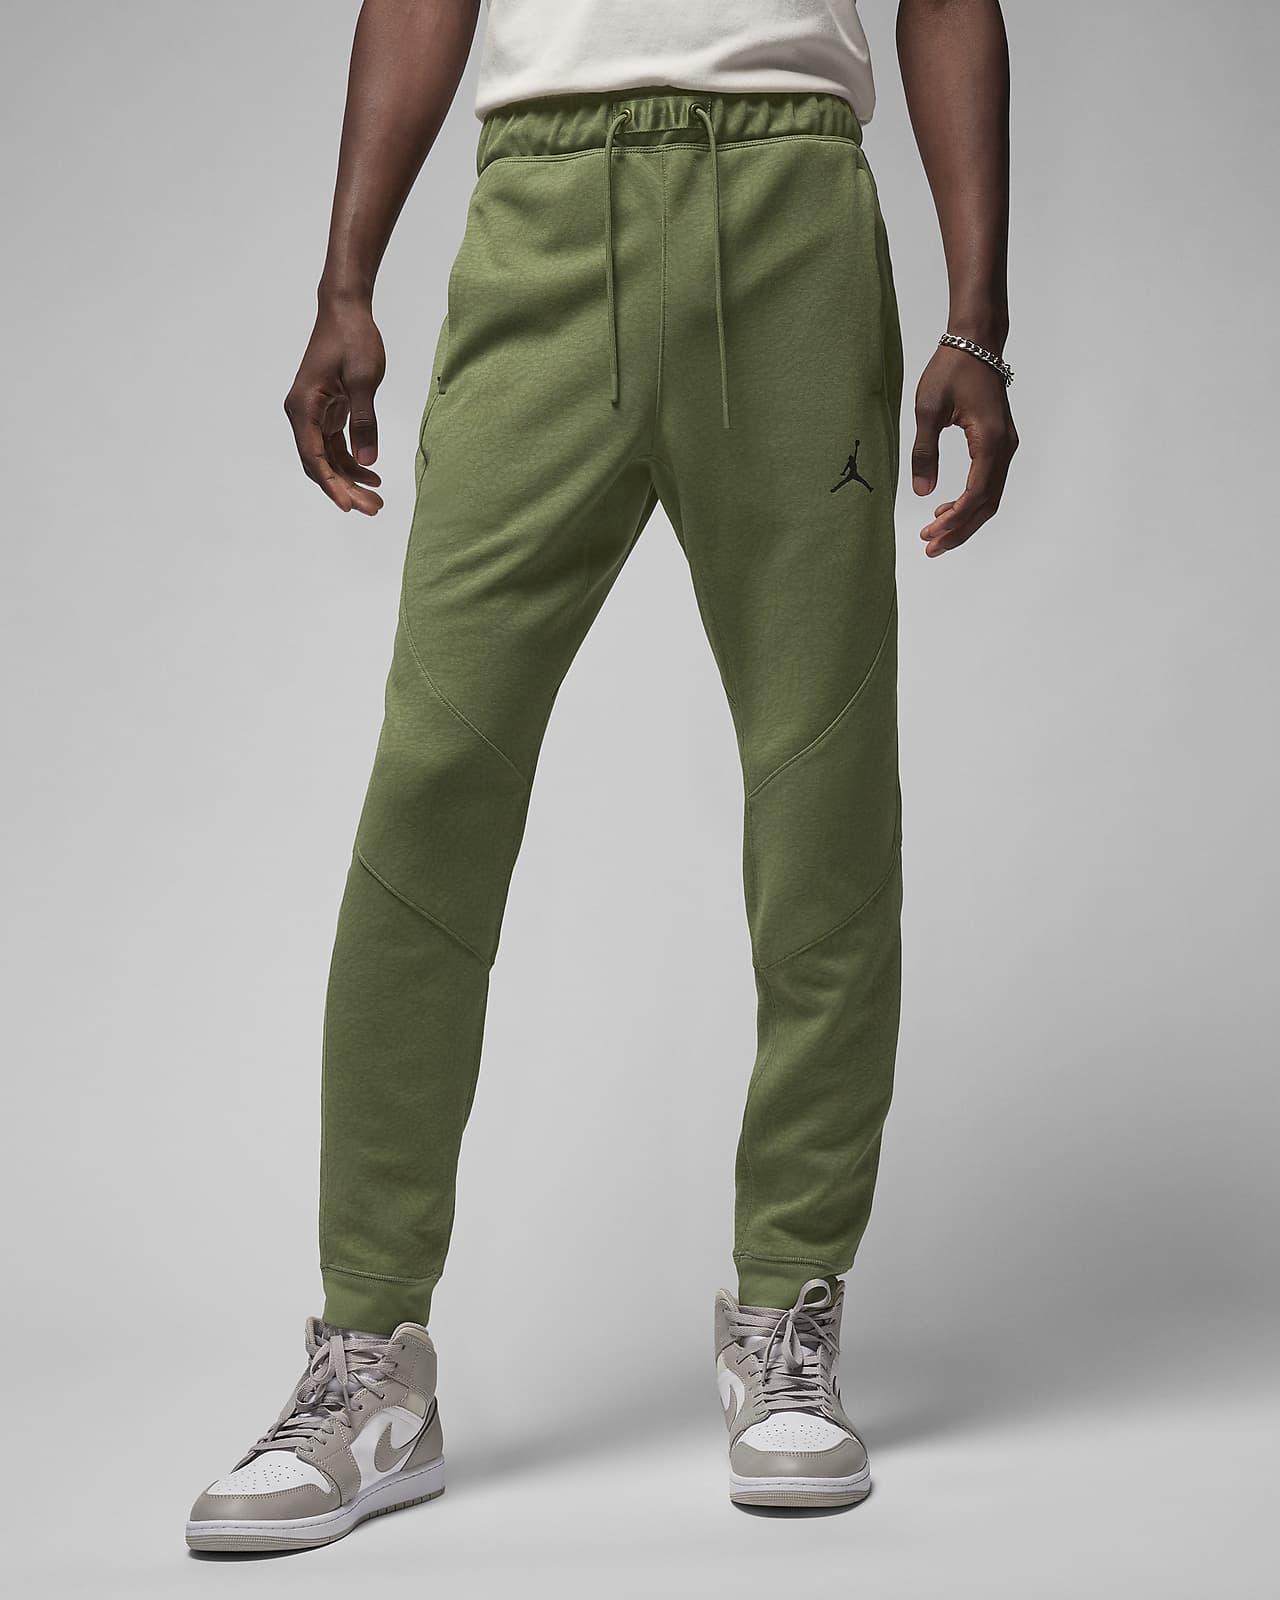 New Nike Air Jordan Flight Heritage Athletic Pants DJ0182-010 Men's Size 30  | eBay